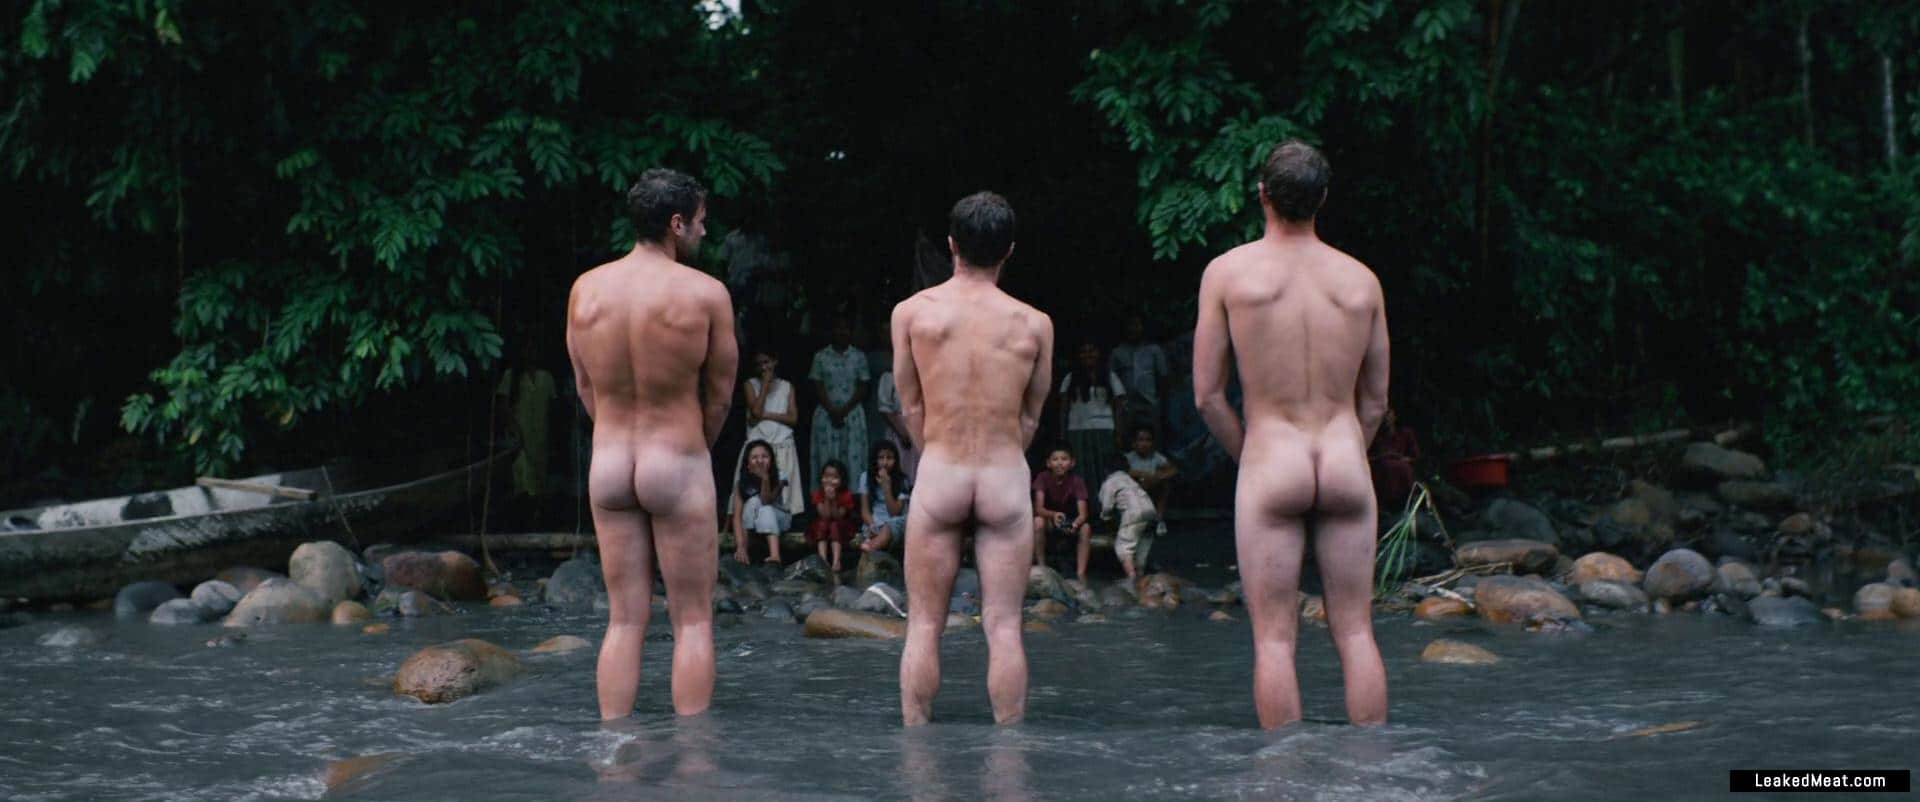 Daniel radcliff naked theater amazon position